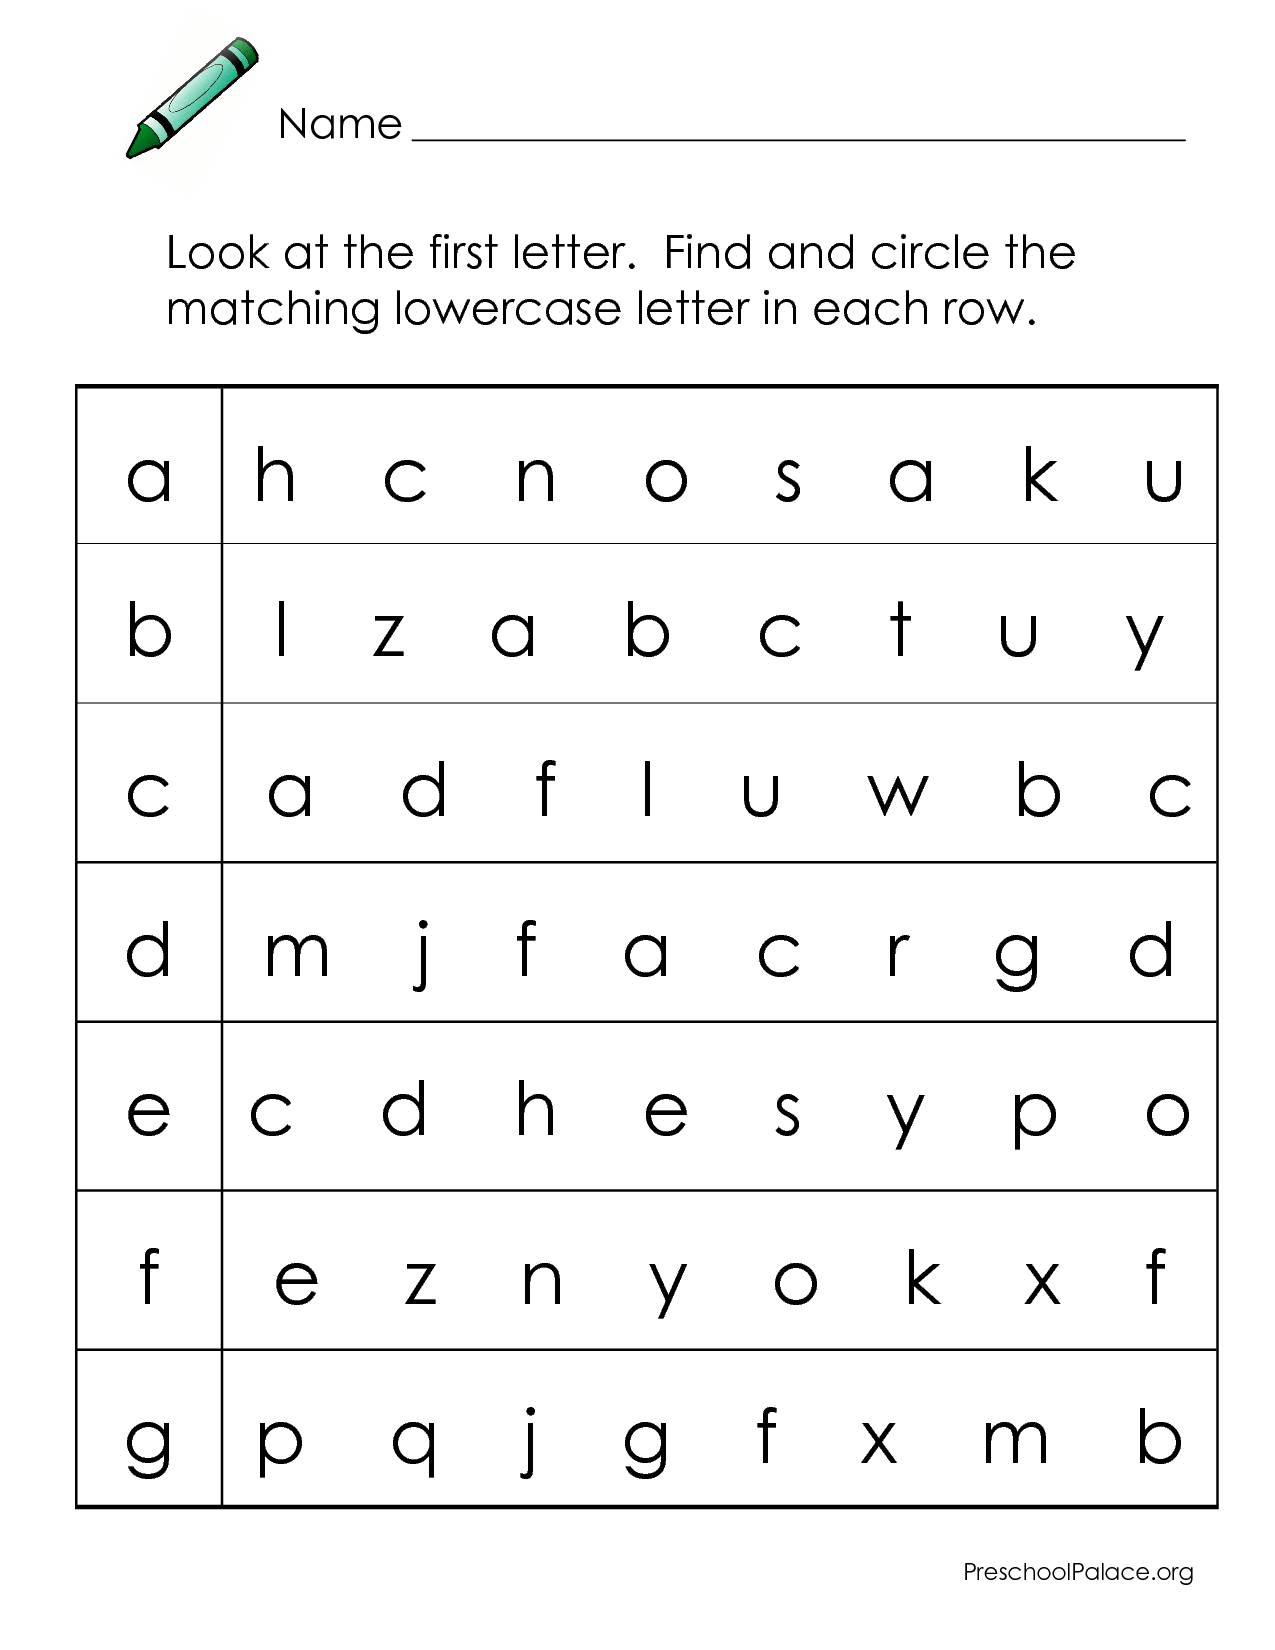 alphabet-review-worksheets-for-preschool-alphabet-review-worksheets-for-preschool-susy-staley